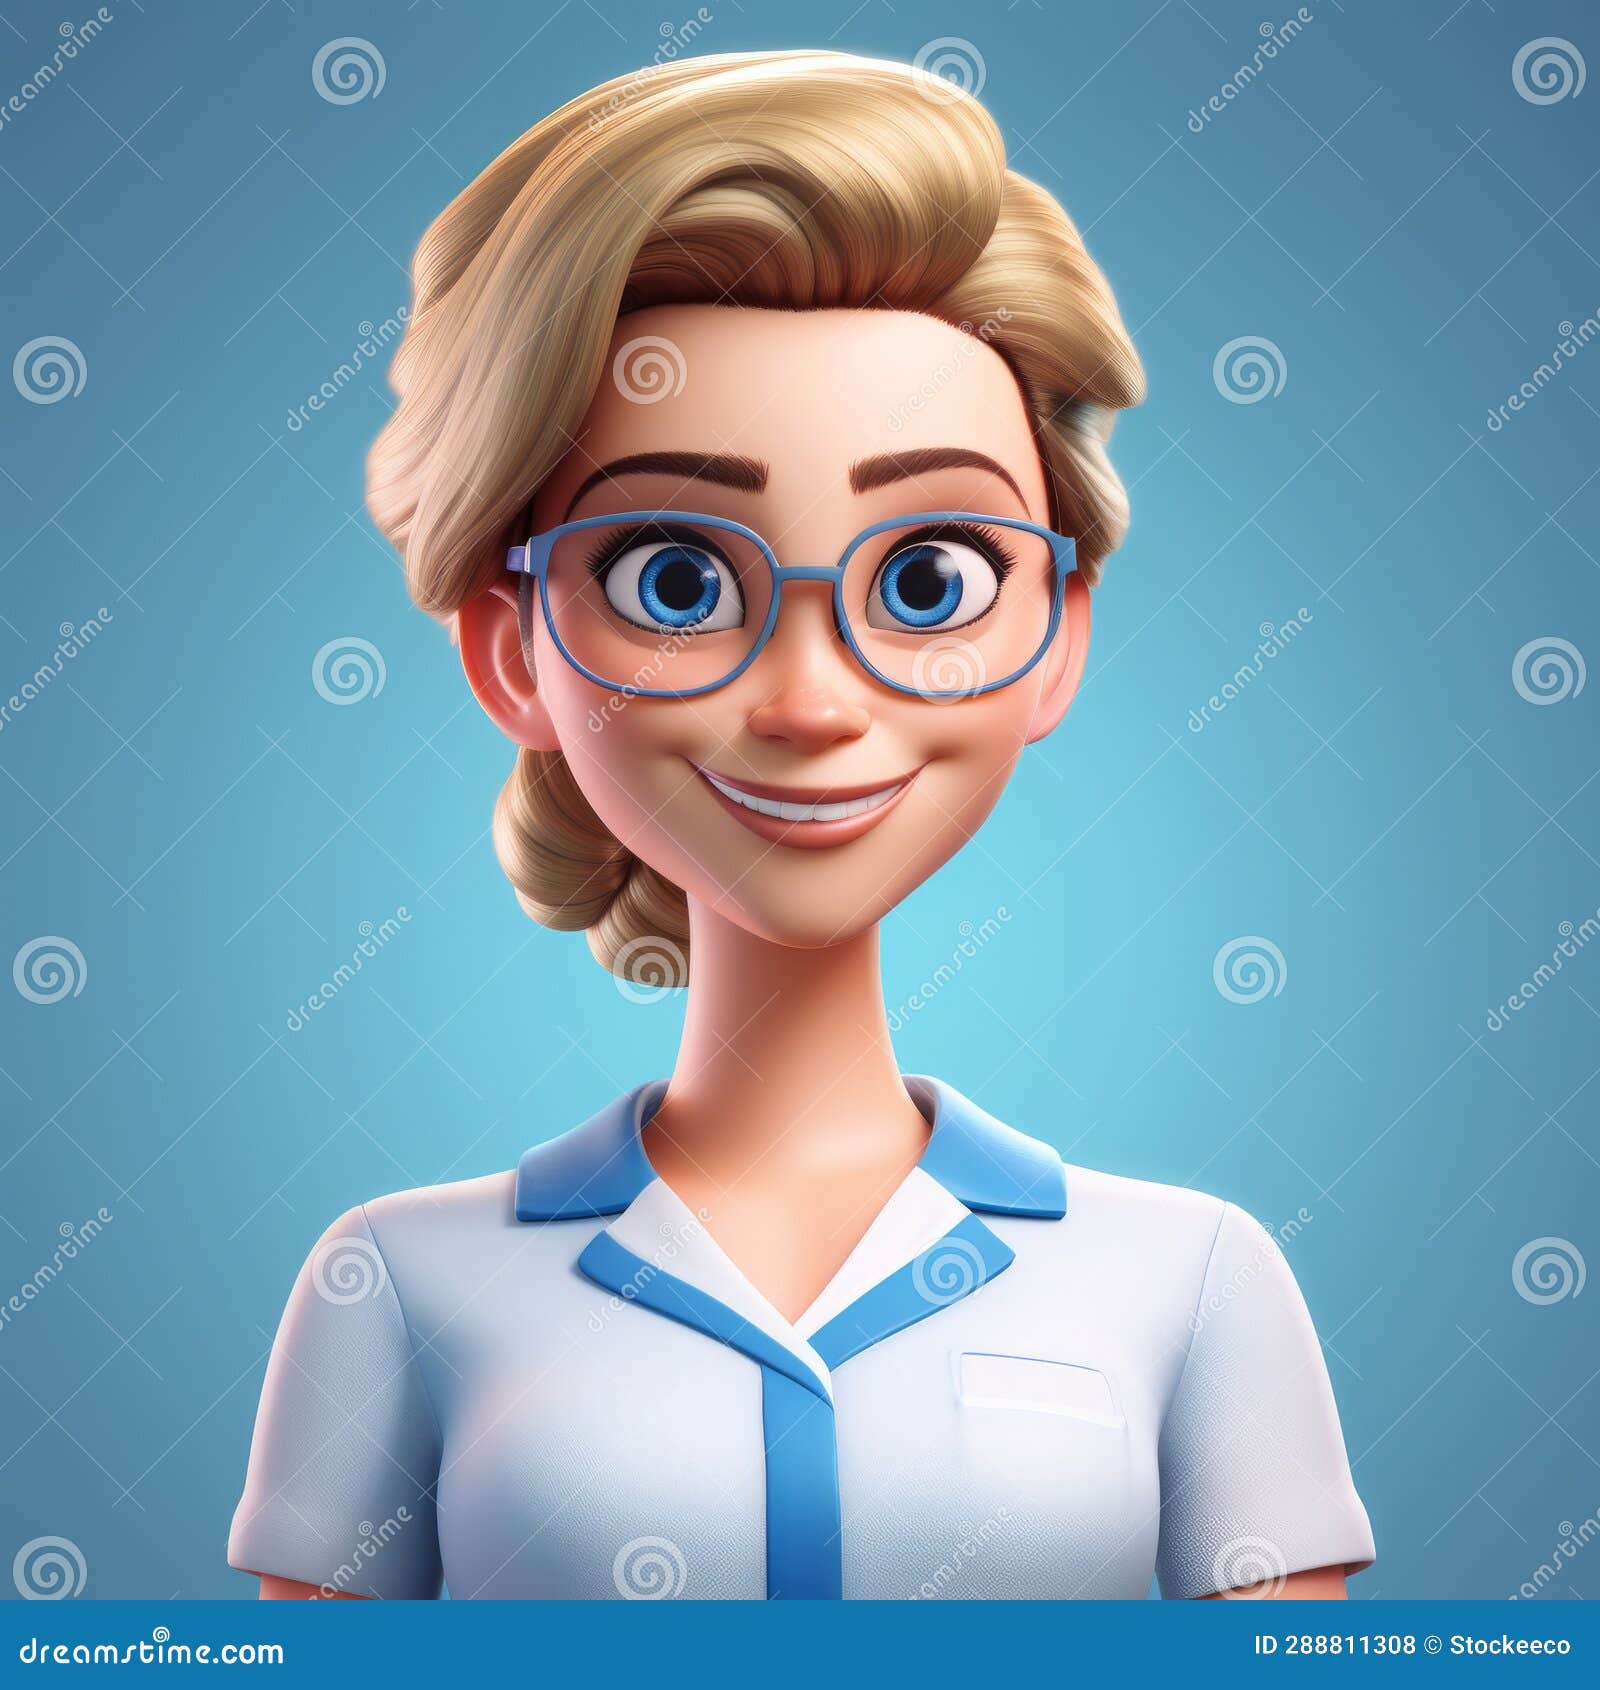 Hyper-realistic Animated Cartoon Nurse In Blue Shirt Stock Photo ...